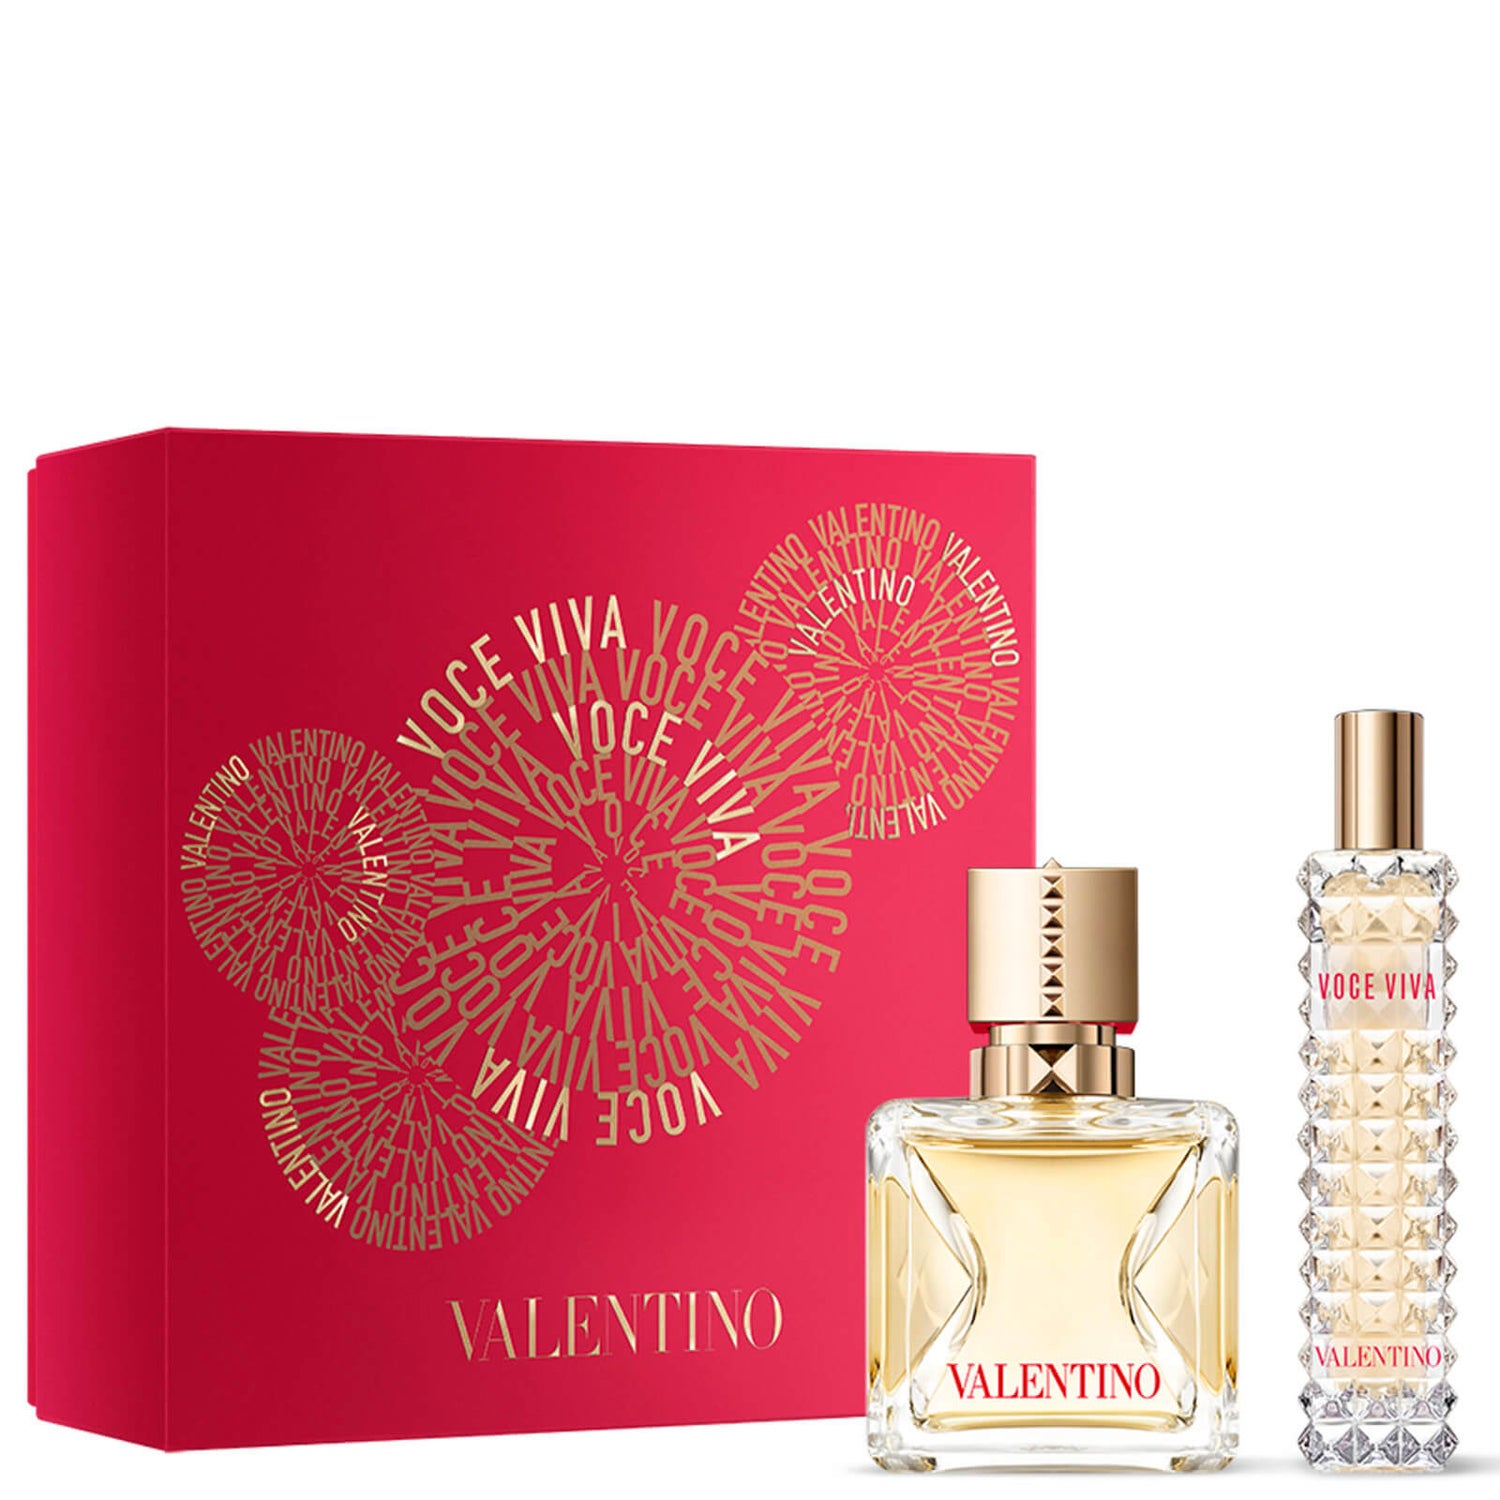 Conjunto de Presentes Valentino Voce Viva Eau de Parfum 50ml